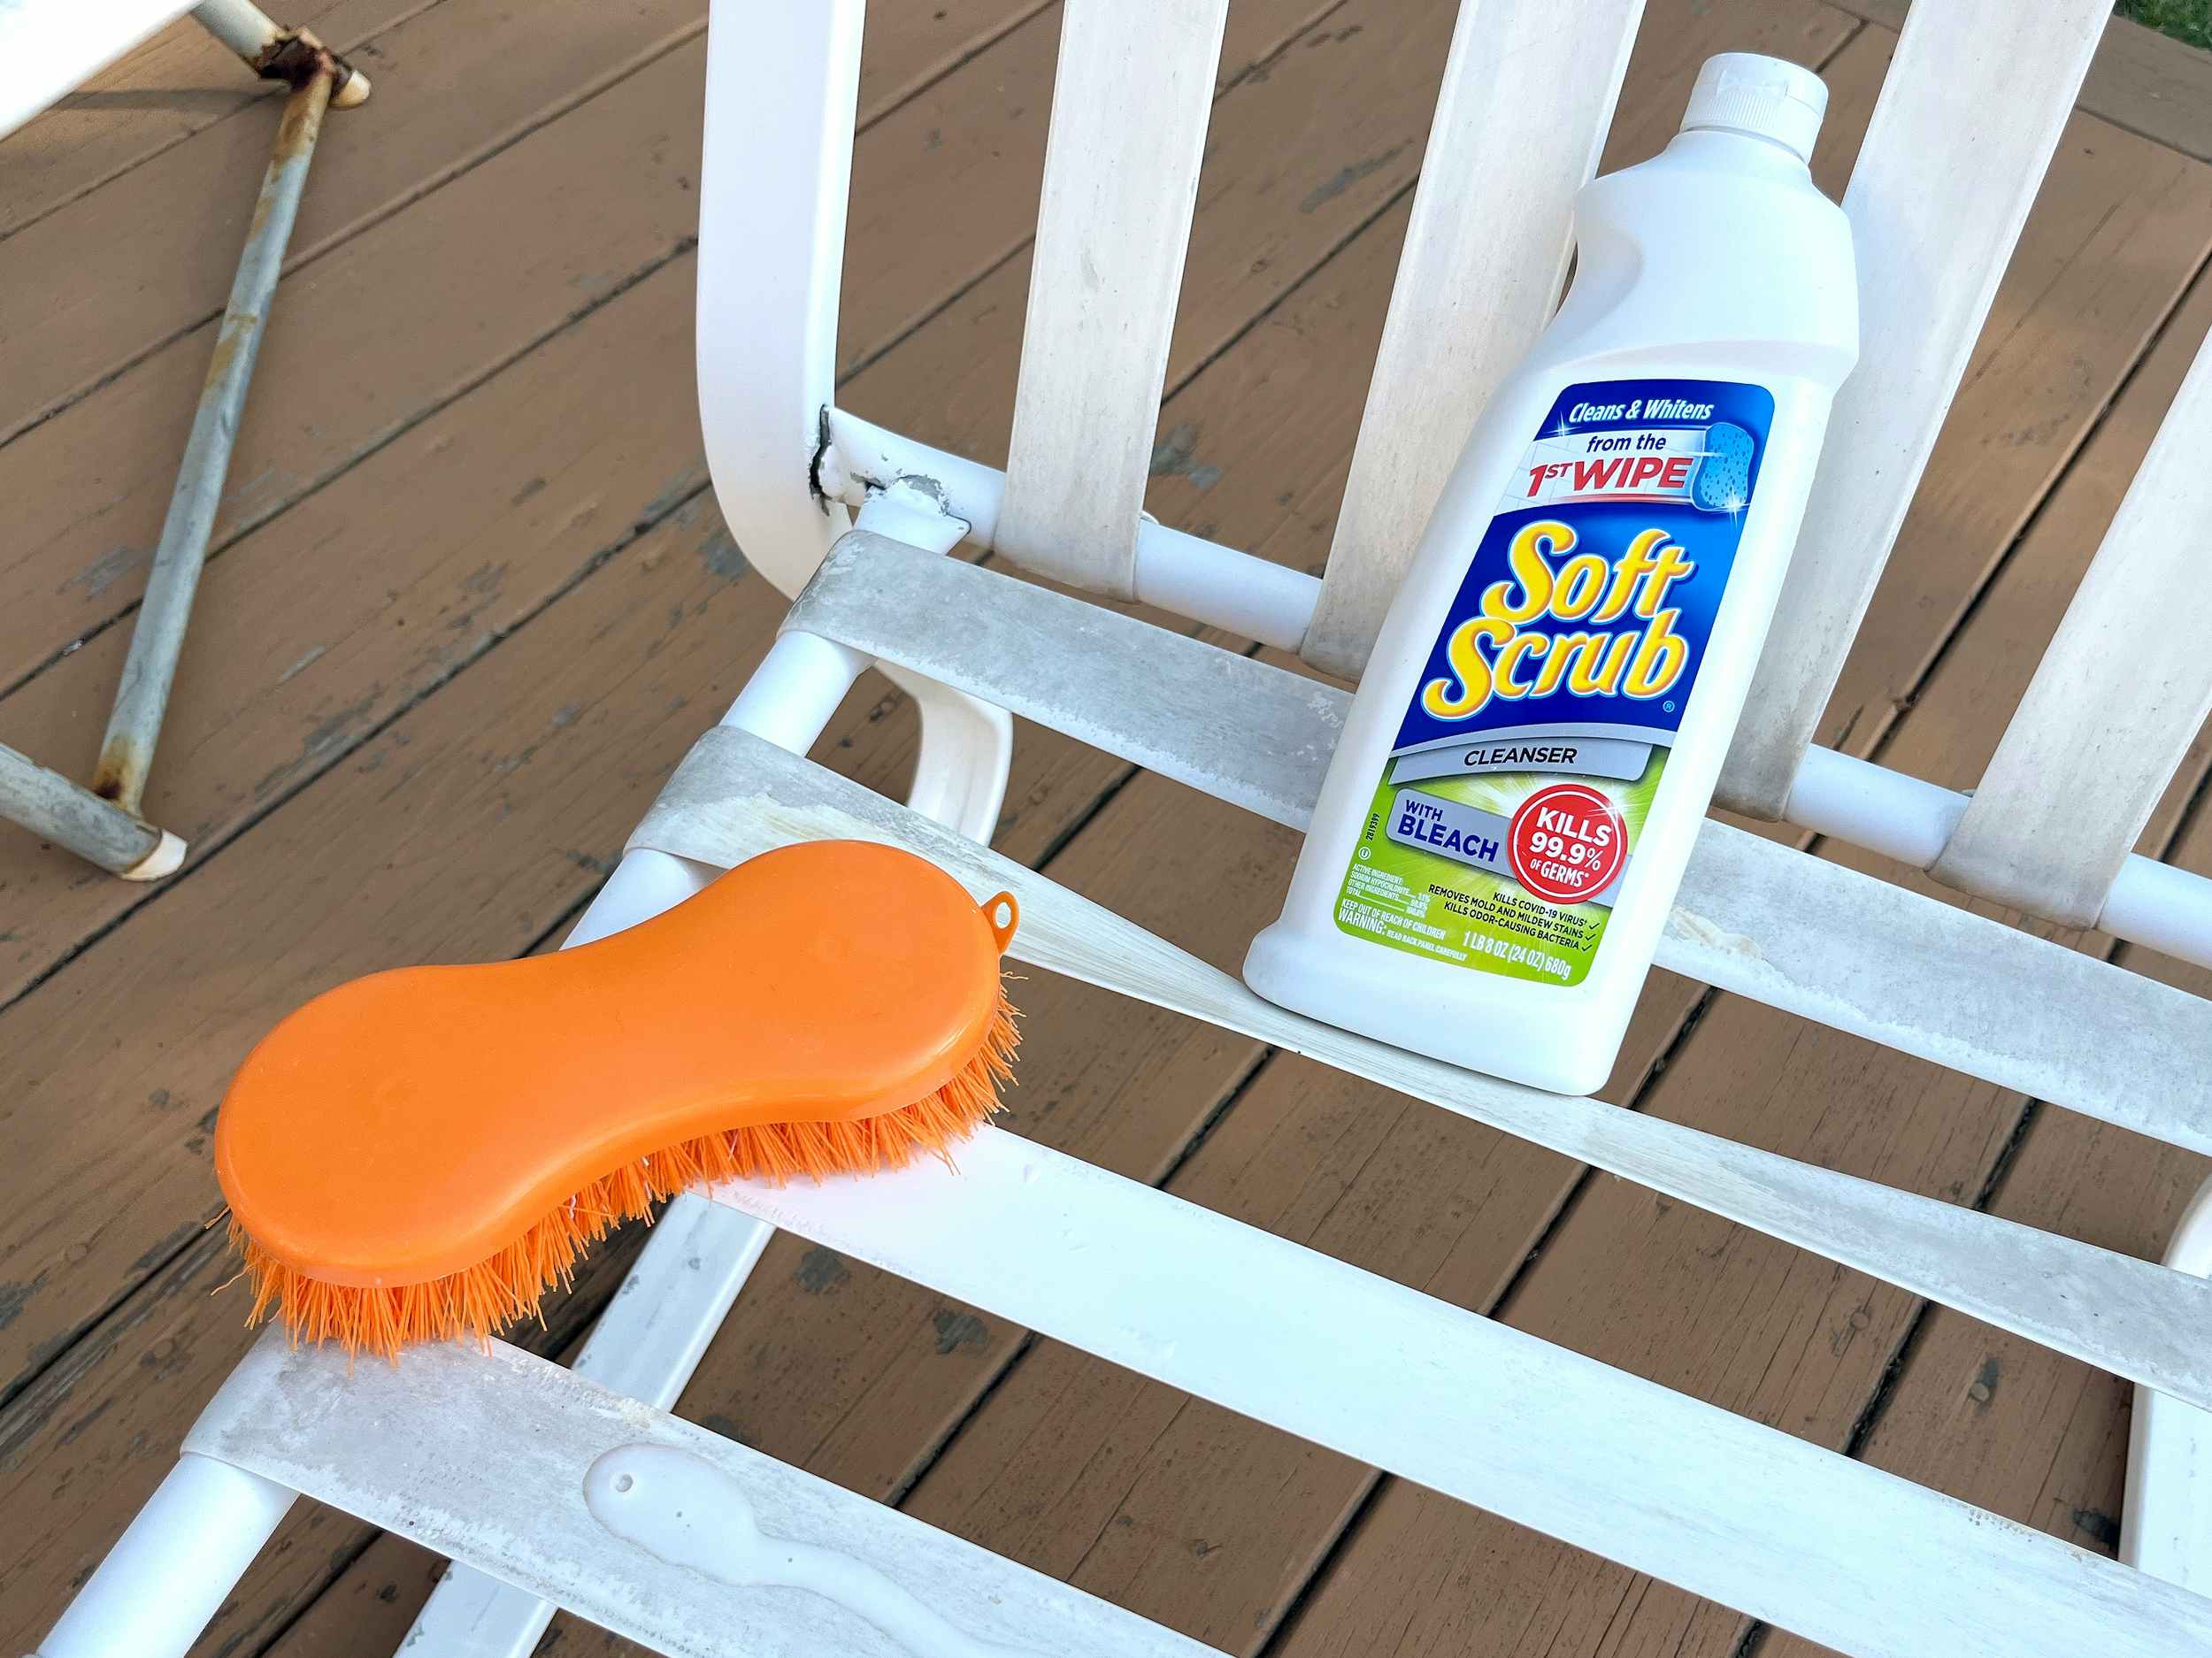 soft scrub cleanser with bleach and scrub brush on vinyl patio furniture